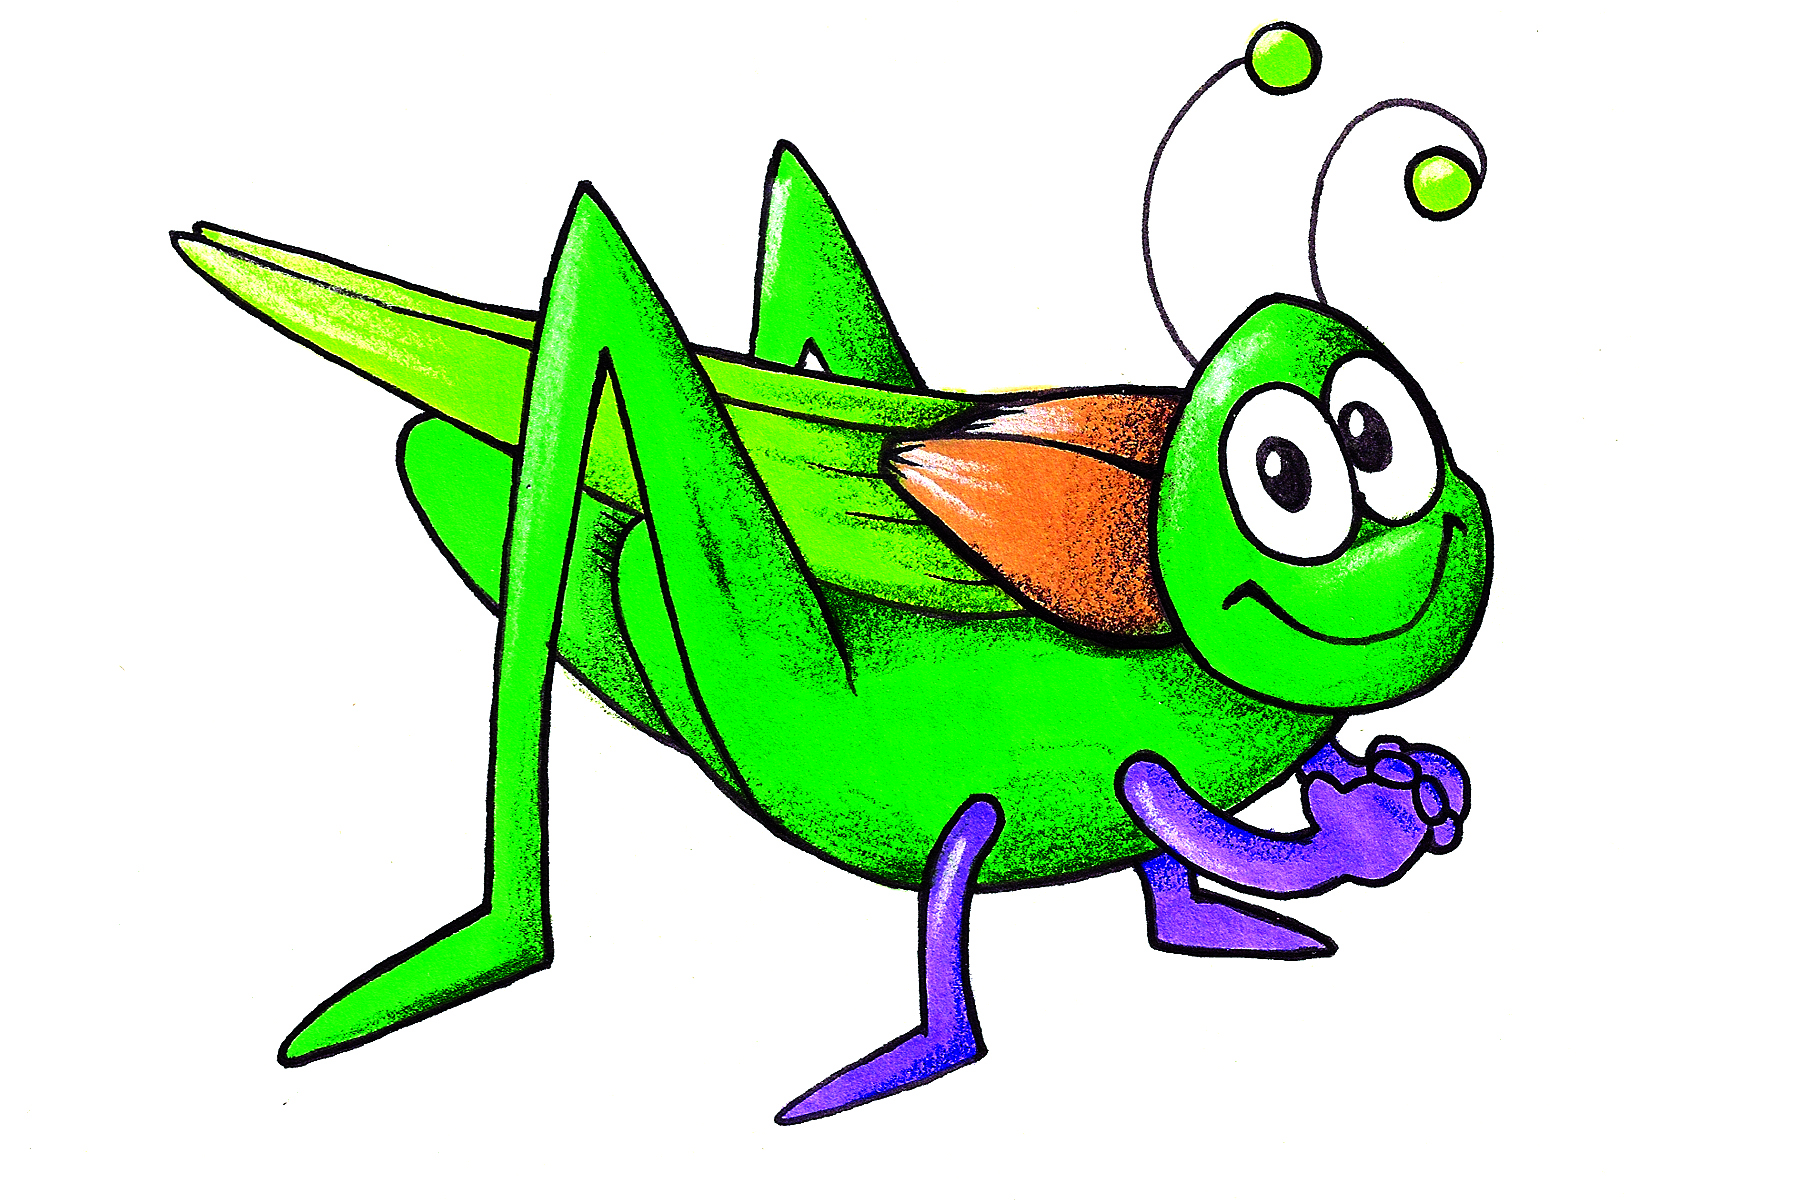 Grasshopper Cartoon Images   Cliparts Co